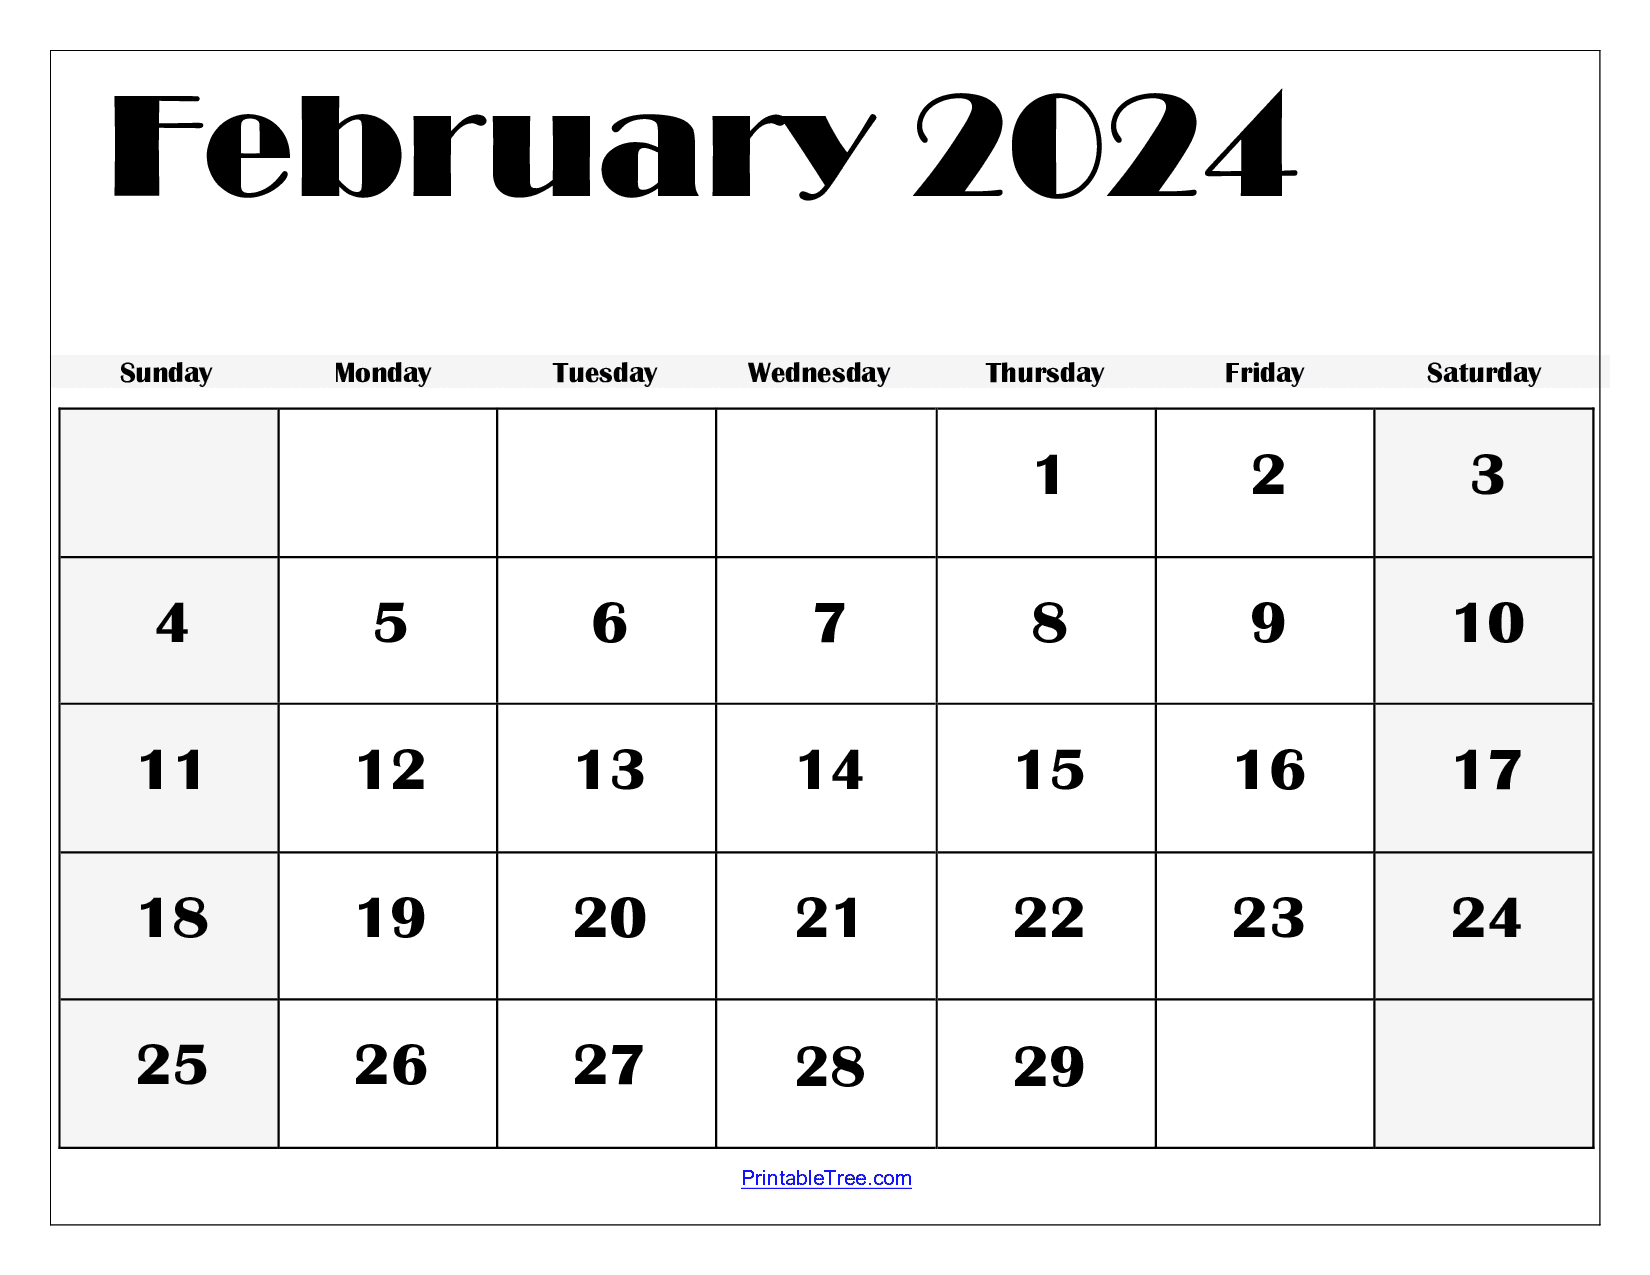 February 2024 Calendar Printable Pdf Template With Holidays for Blank Calendar February 2024 Free Printable